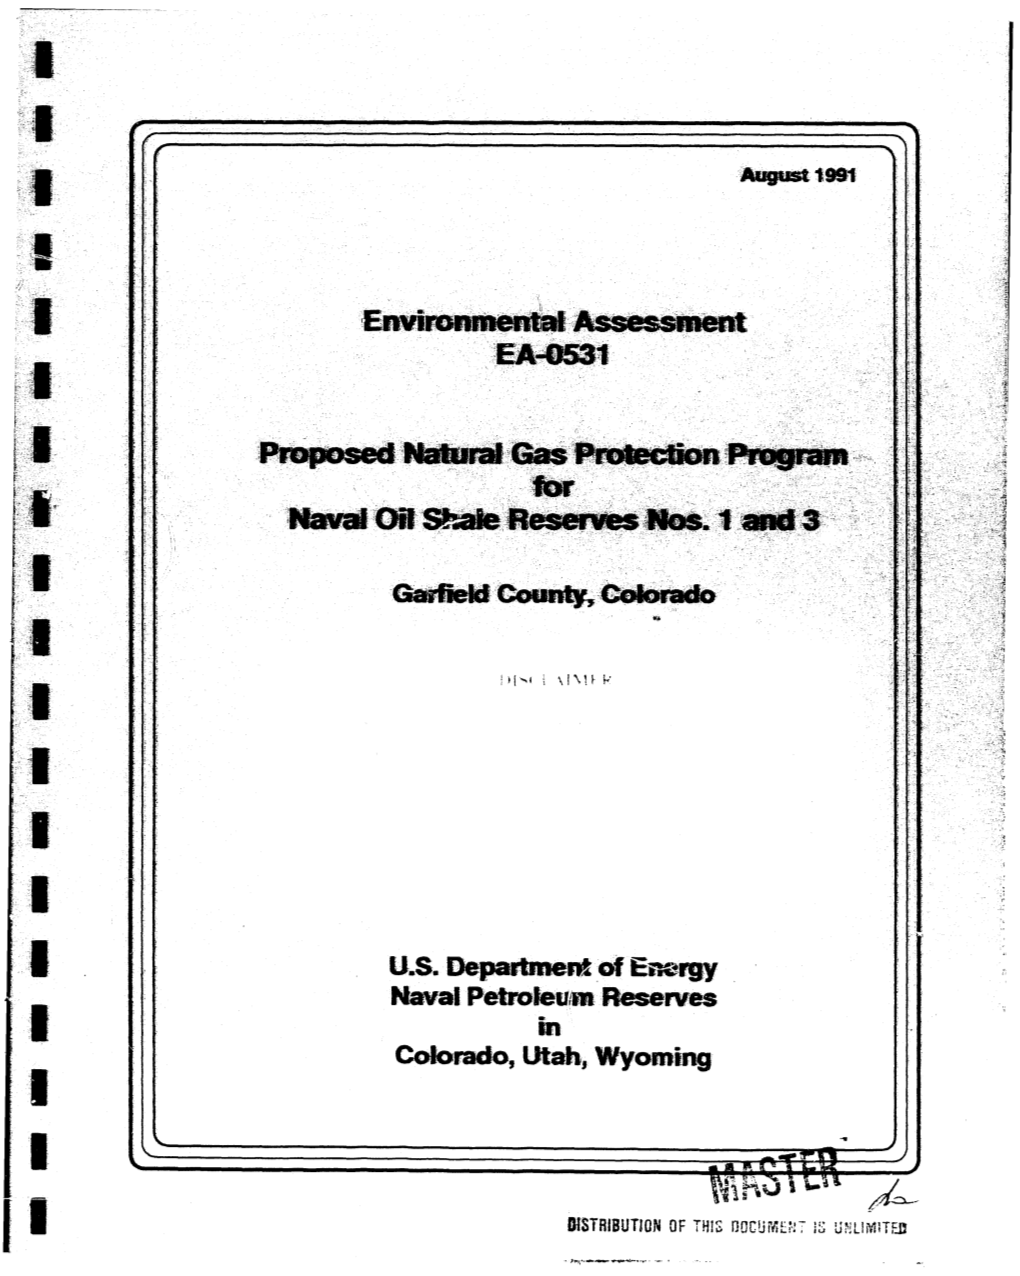 EA-0531: Final Environmental Assessment